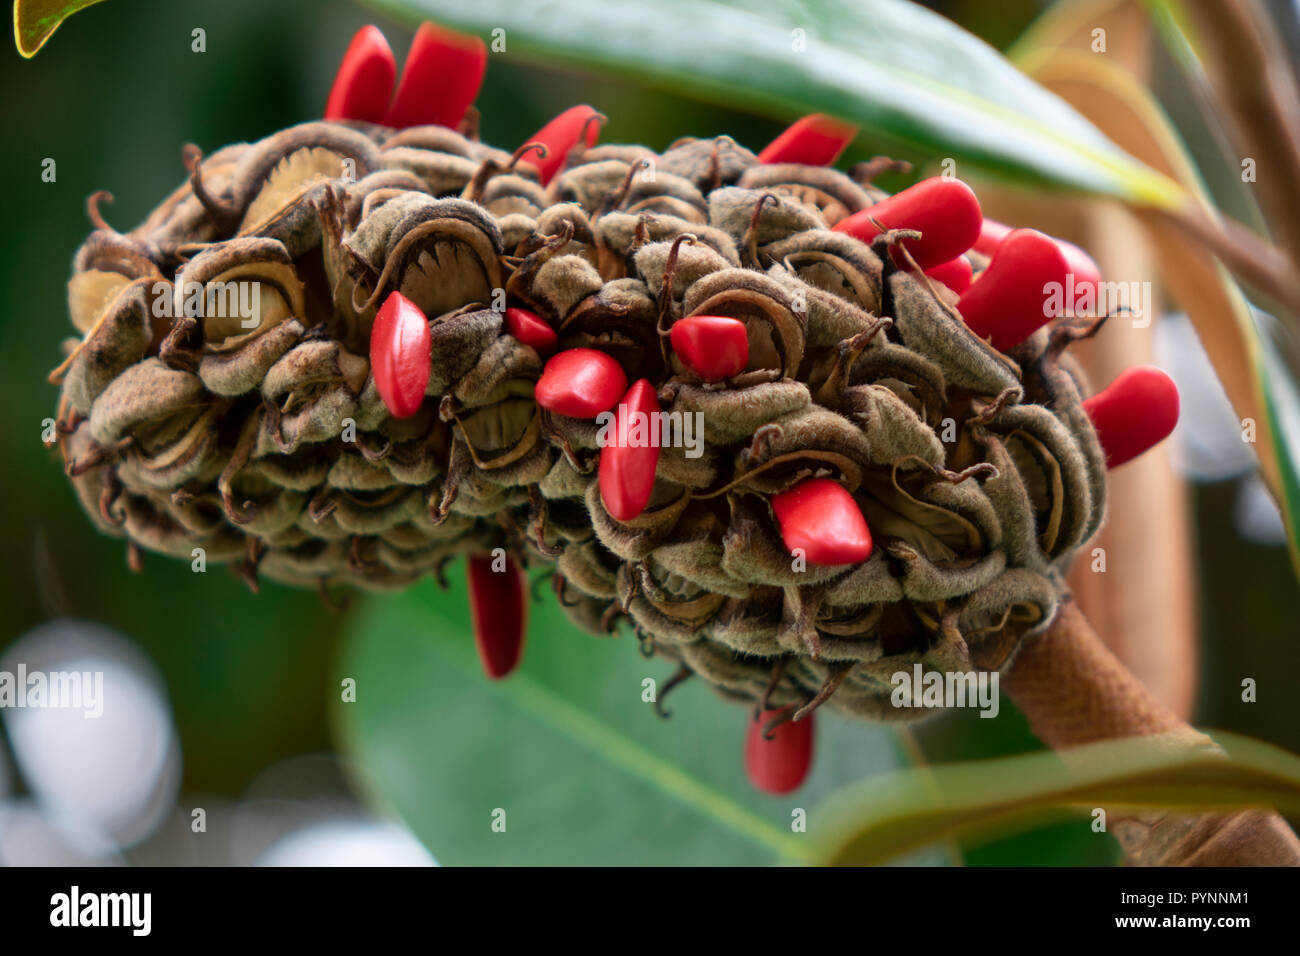 ripe fruit of magnolia grandiflora with its seeds Stock Photo